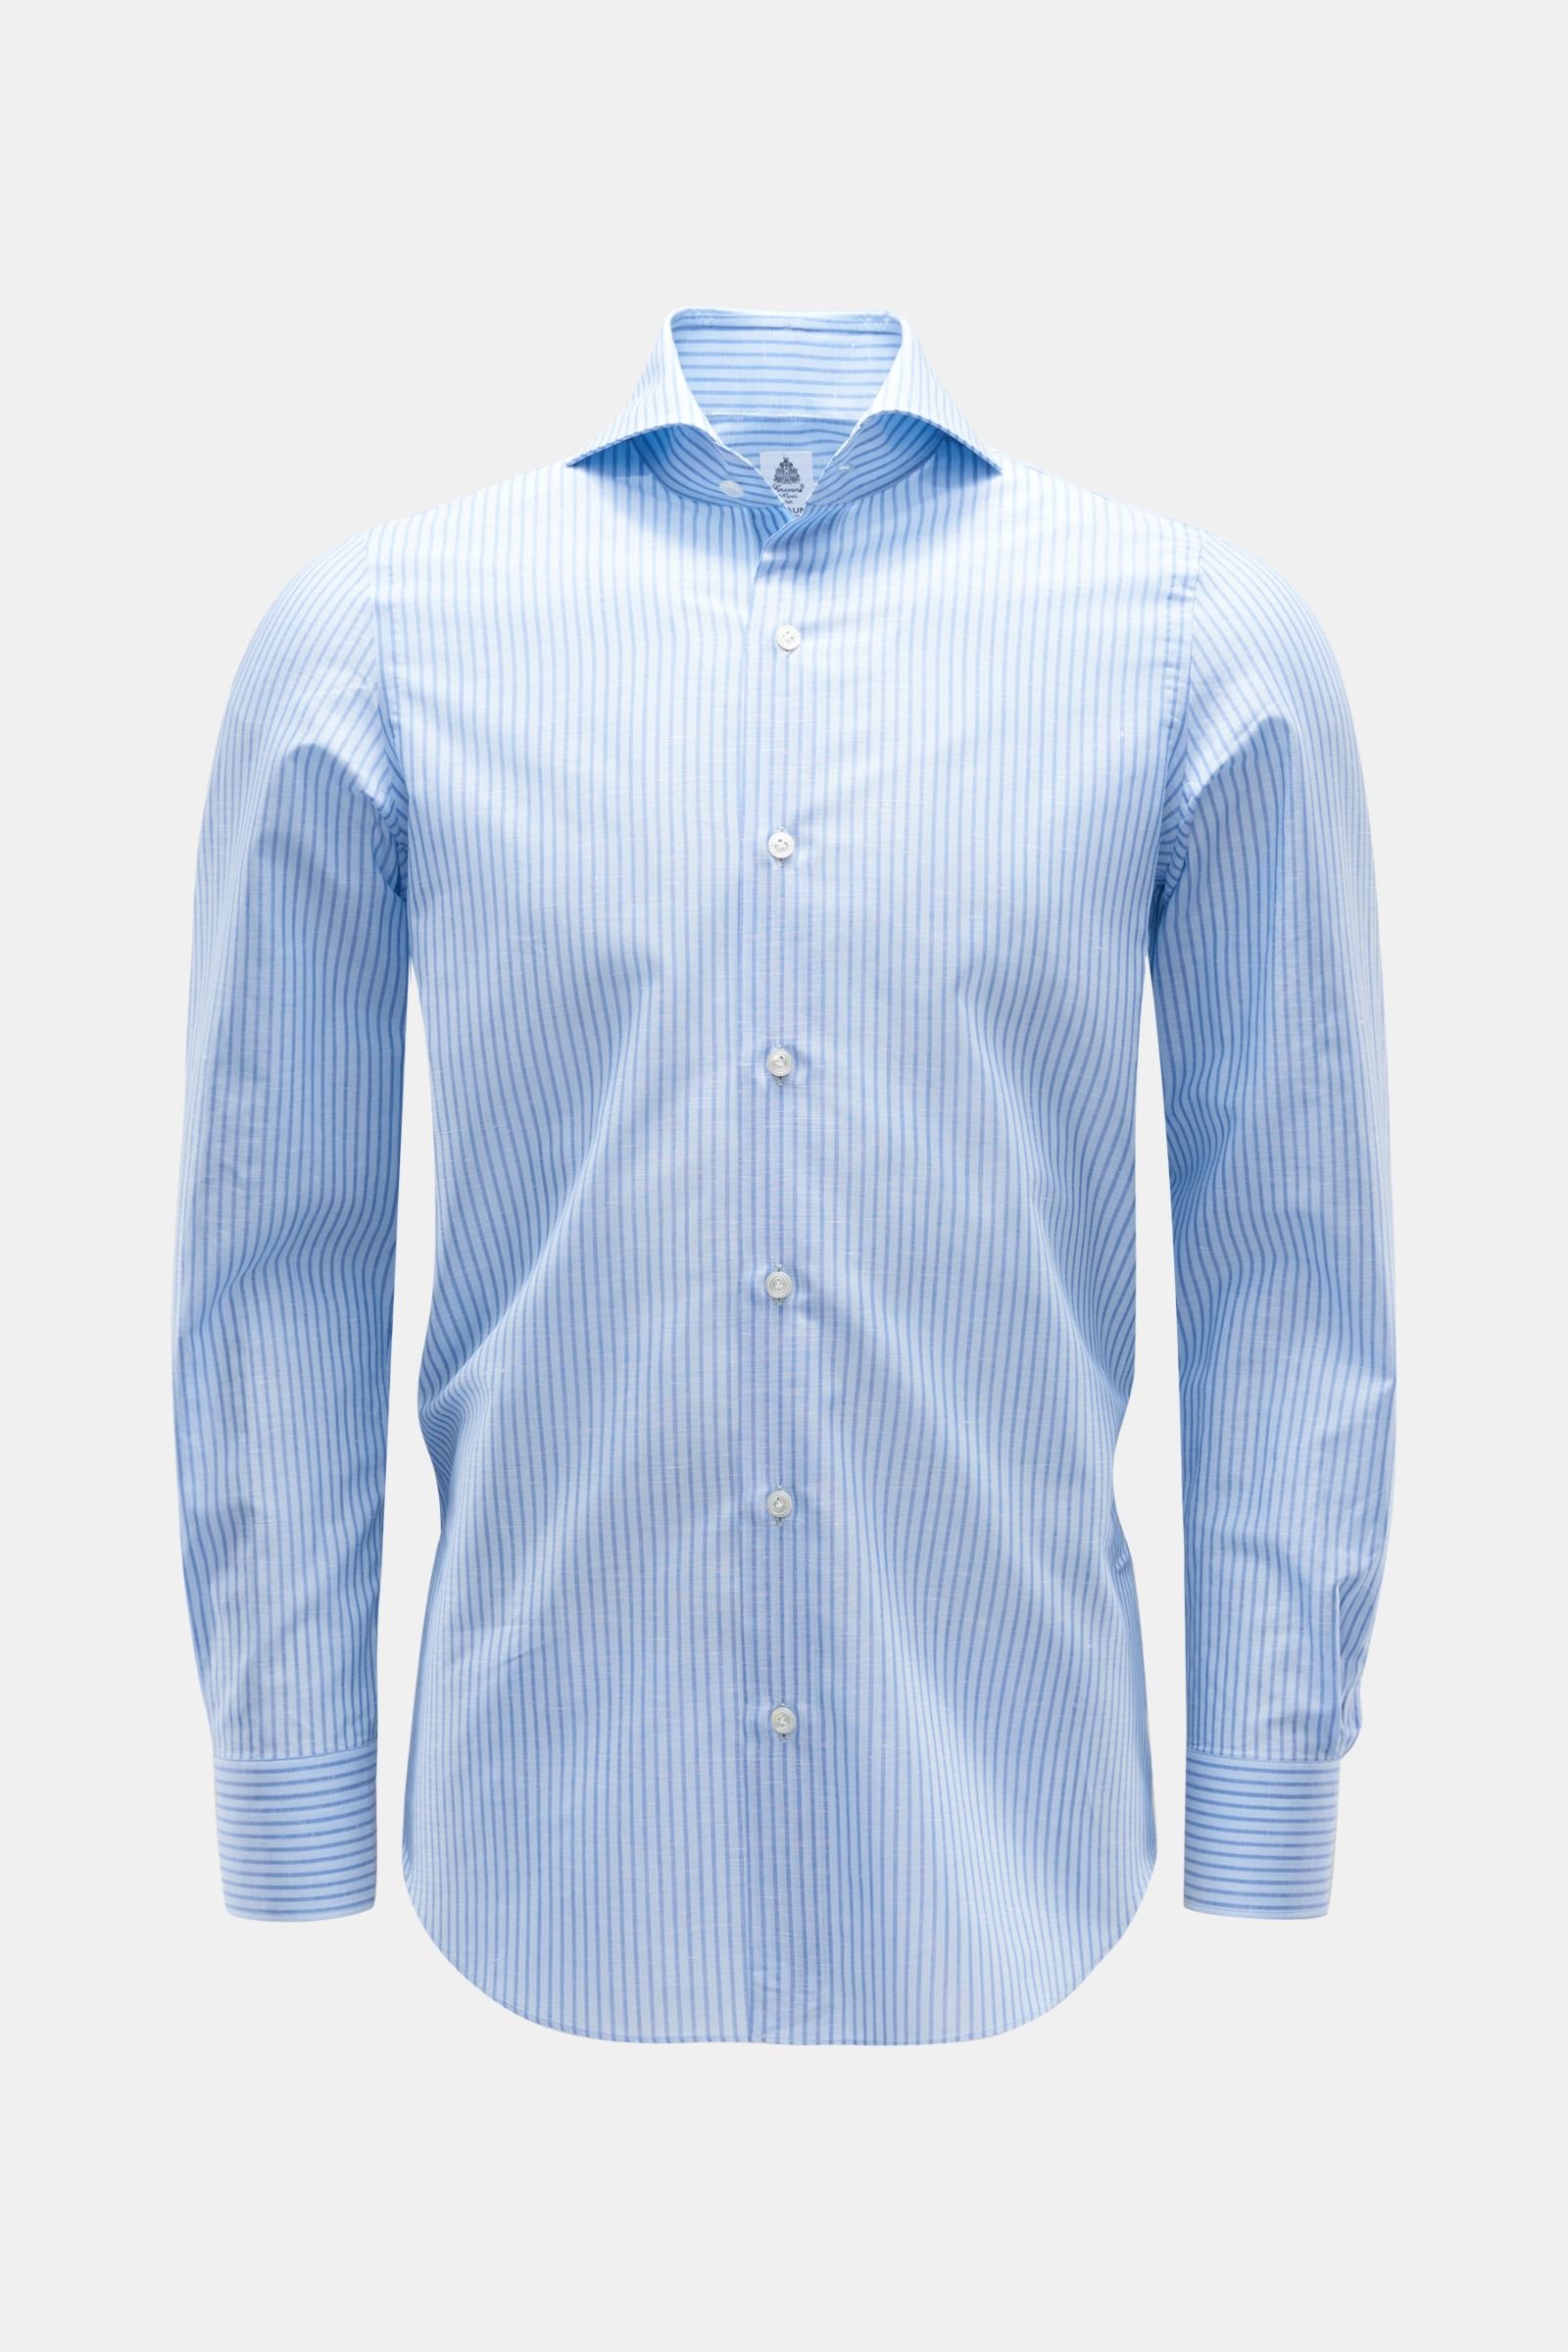 Business shirt 'Sergio Milano' shark collar light blue/blue striped